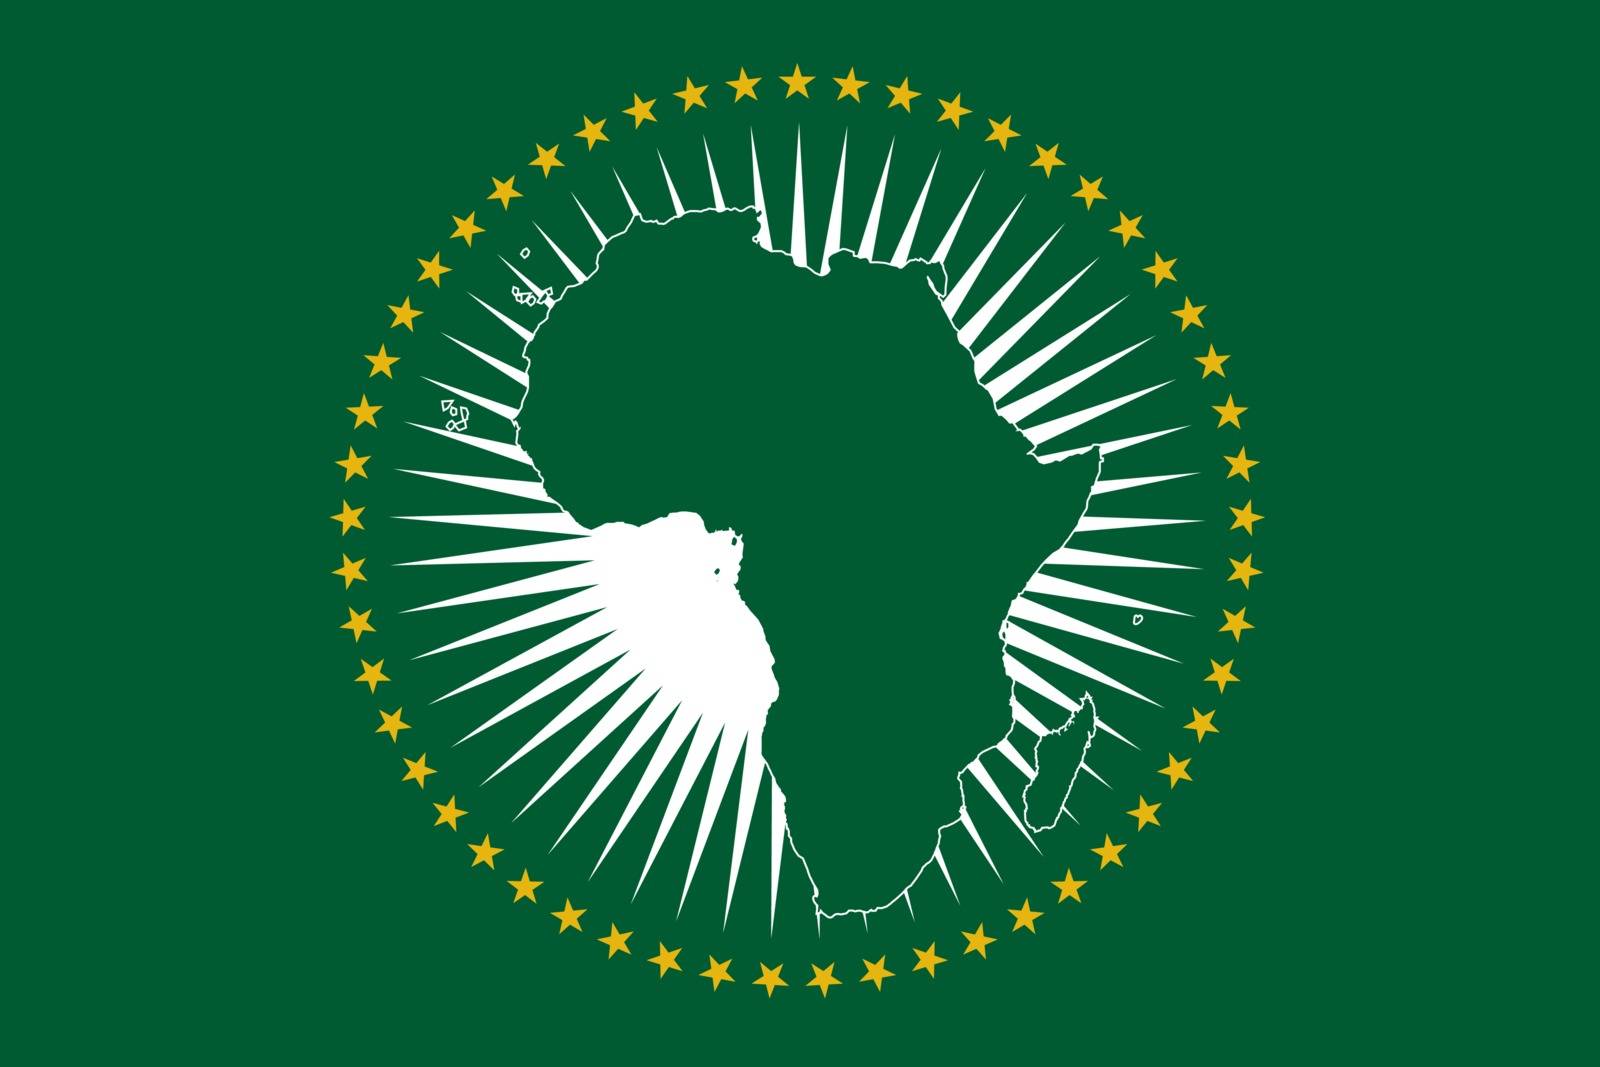 An African Union flag design